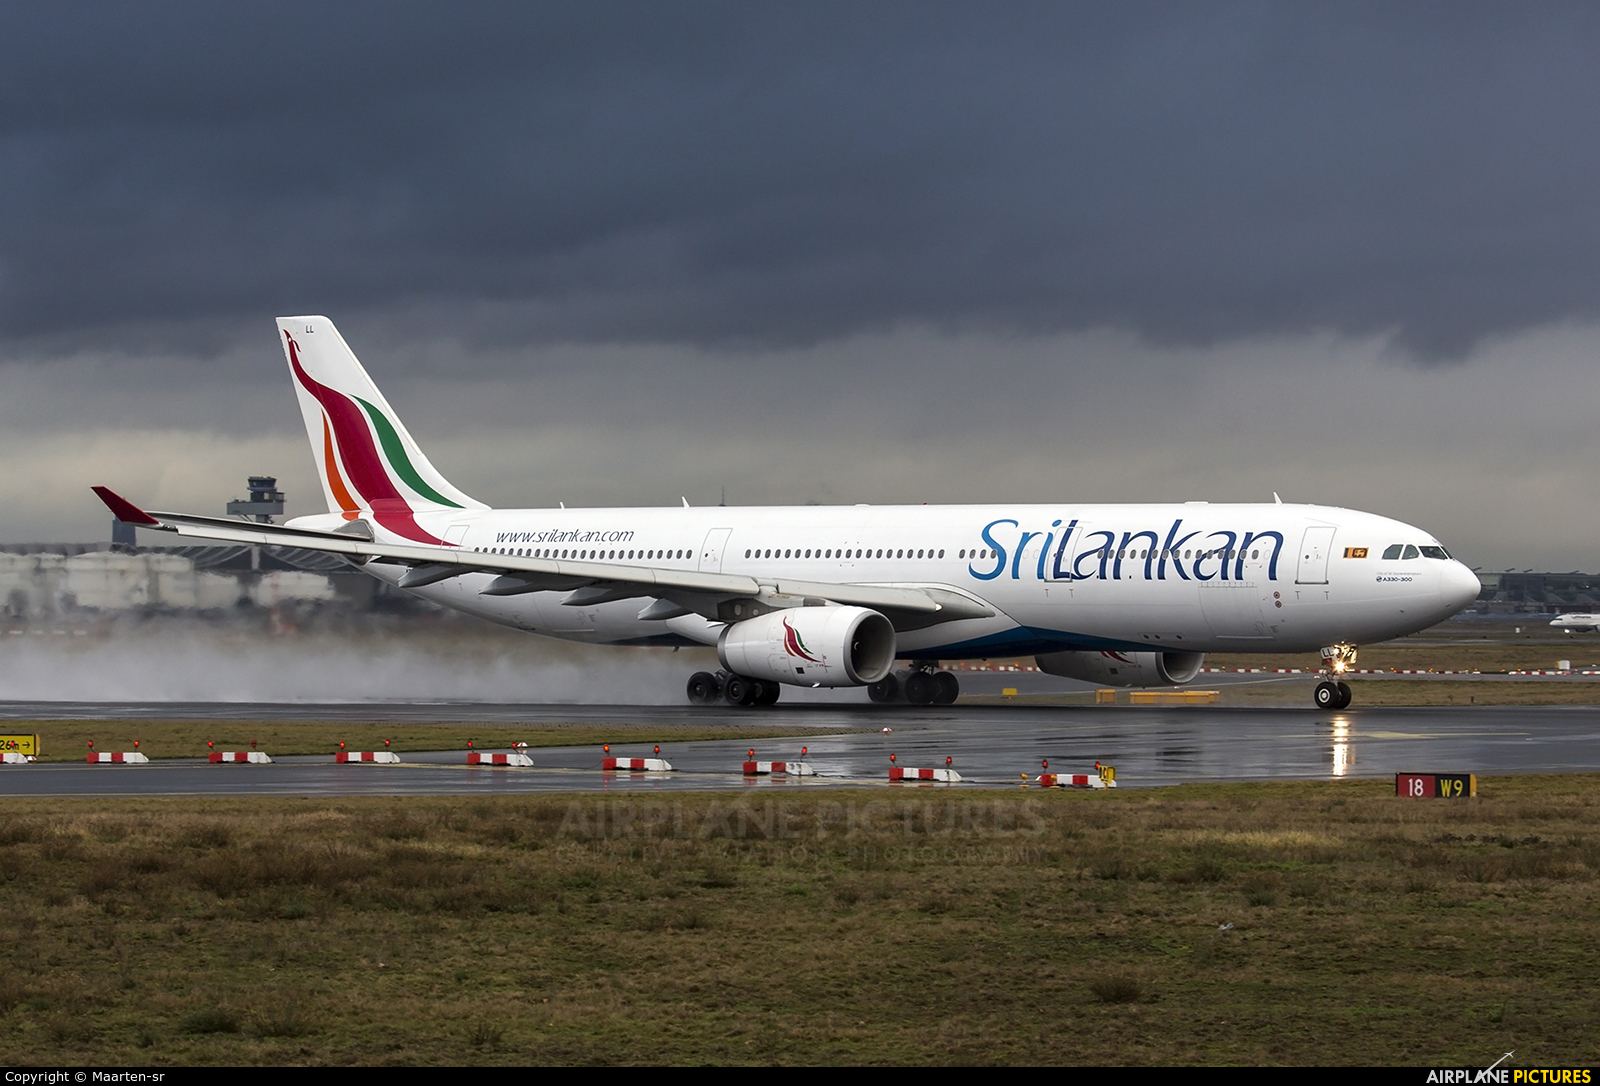 SriLankan Airlines 4R-ALL aircraft at Frankfurt